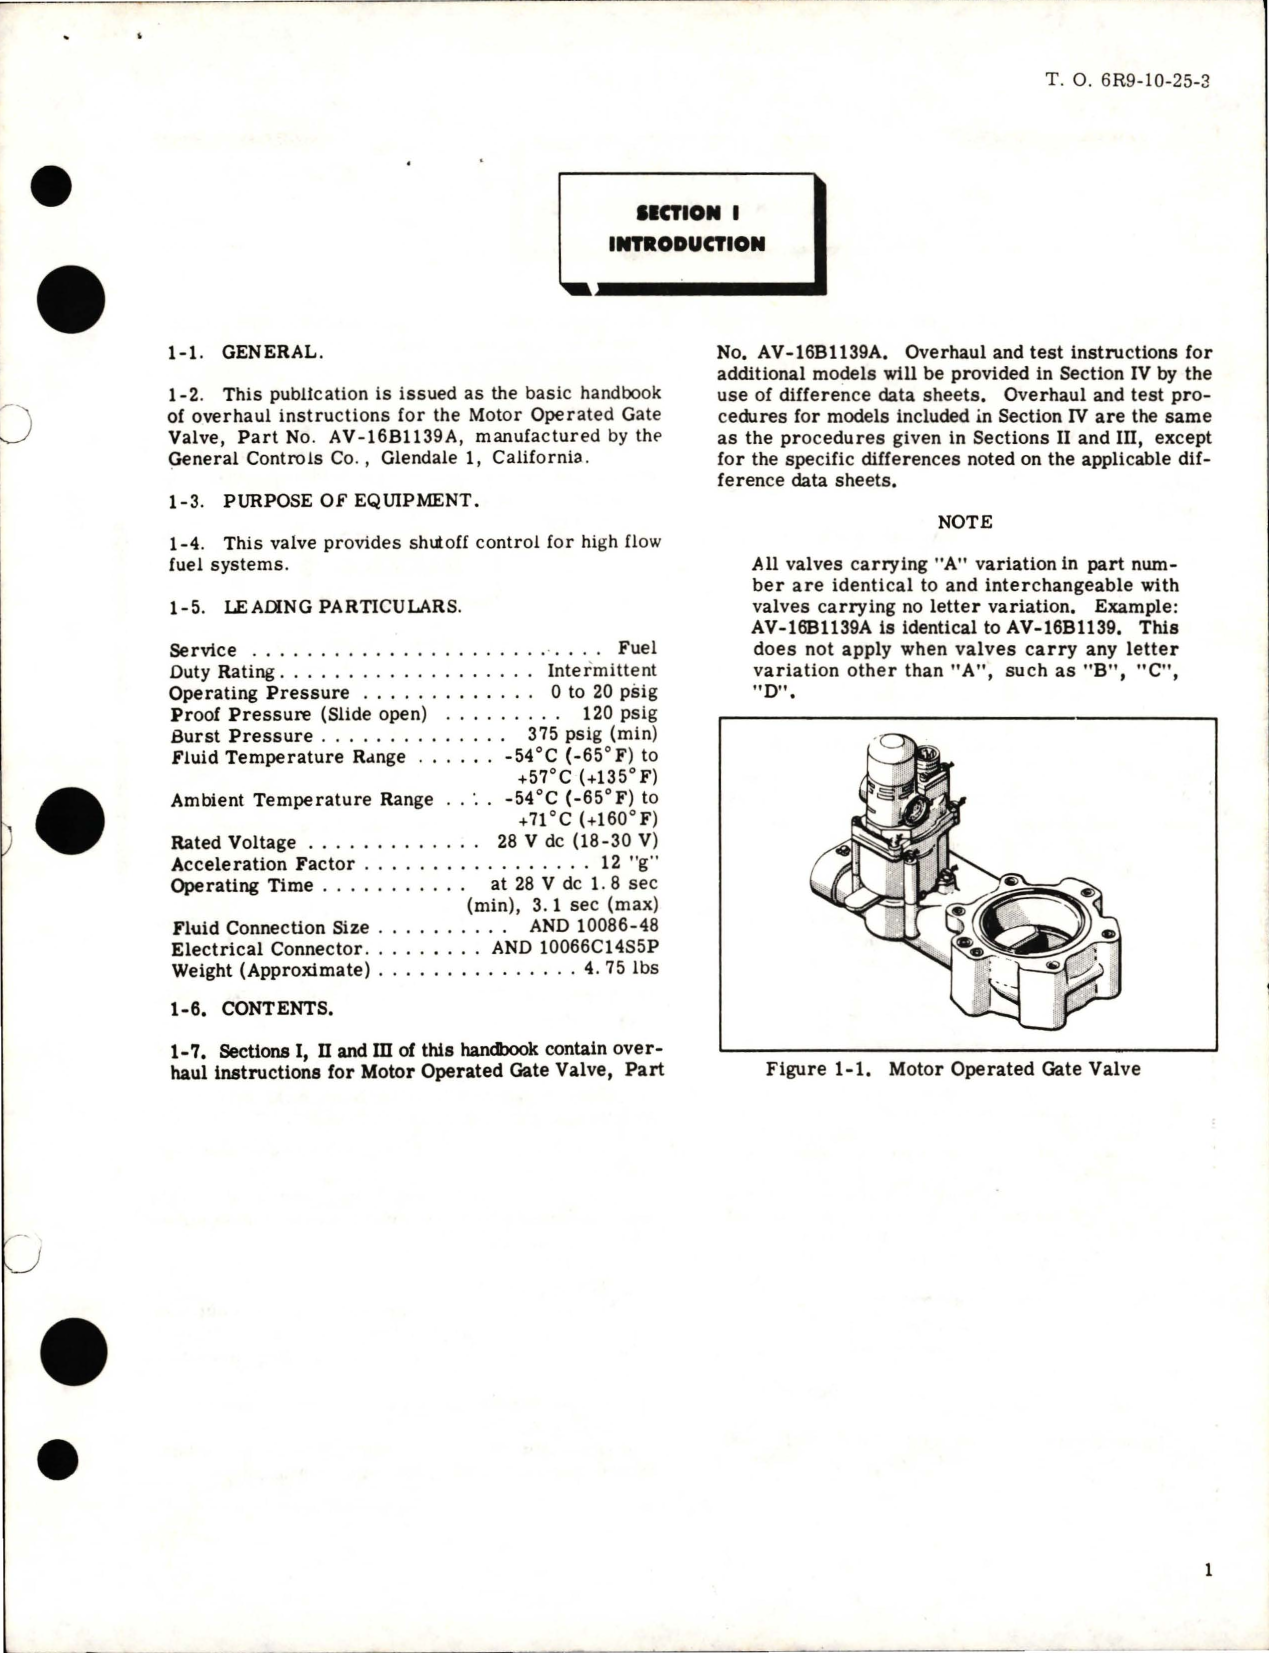 Sample page 5 from AirCorps Library document: Overhaul Instructions for Motor Operated Gate Valve - AV-16B Series - Part AV-16B1139A and Similar Valves